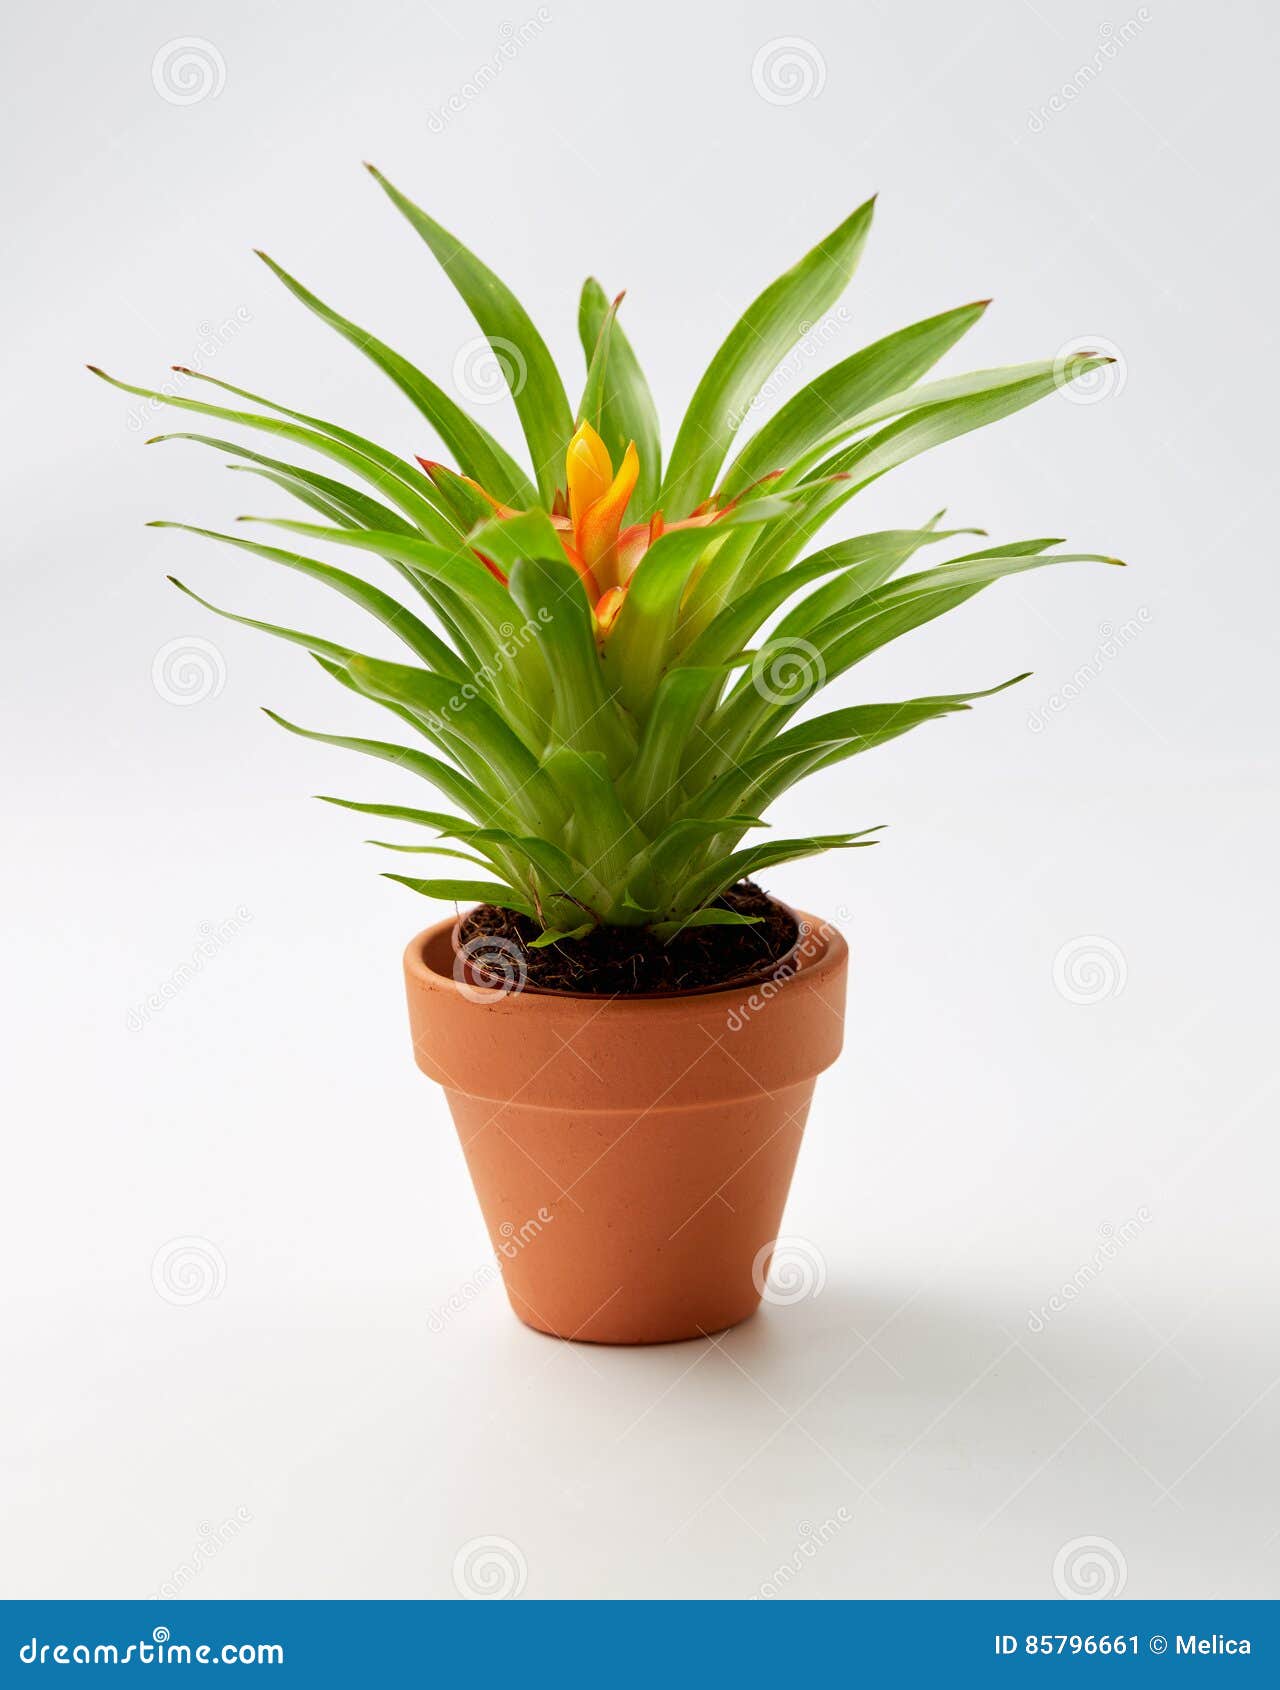 Potted Bromelia Plant stock image. Image of ceramic, botany - 85796661